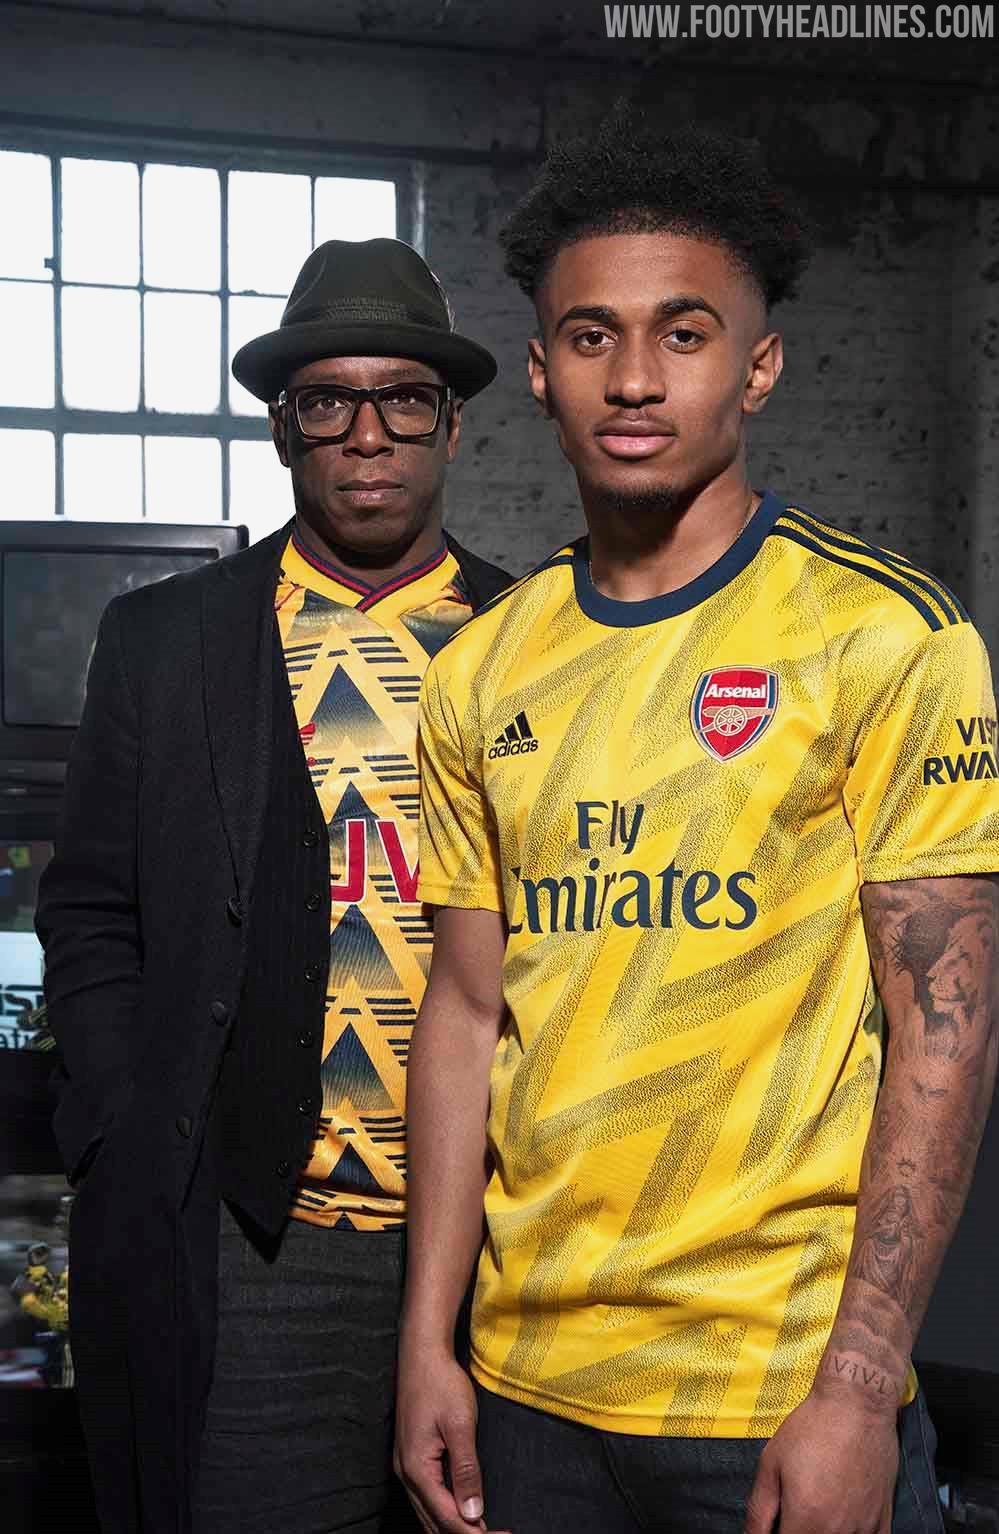 Spectacular Adidas Arsenal Bruised Banana Kit Remake + Retro